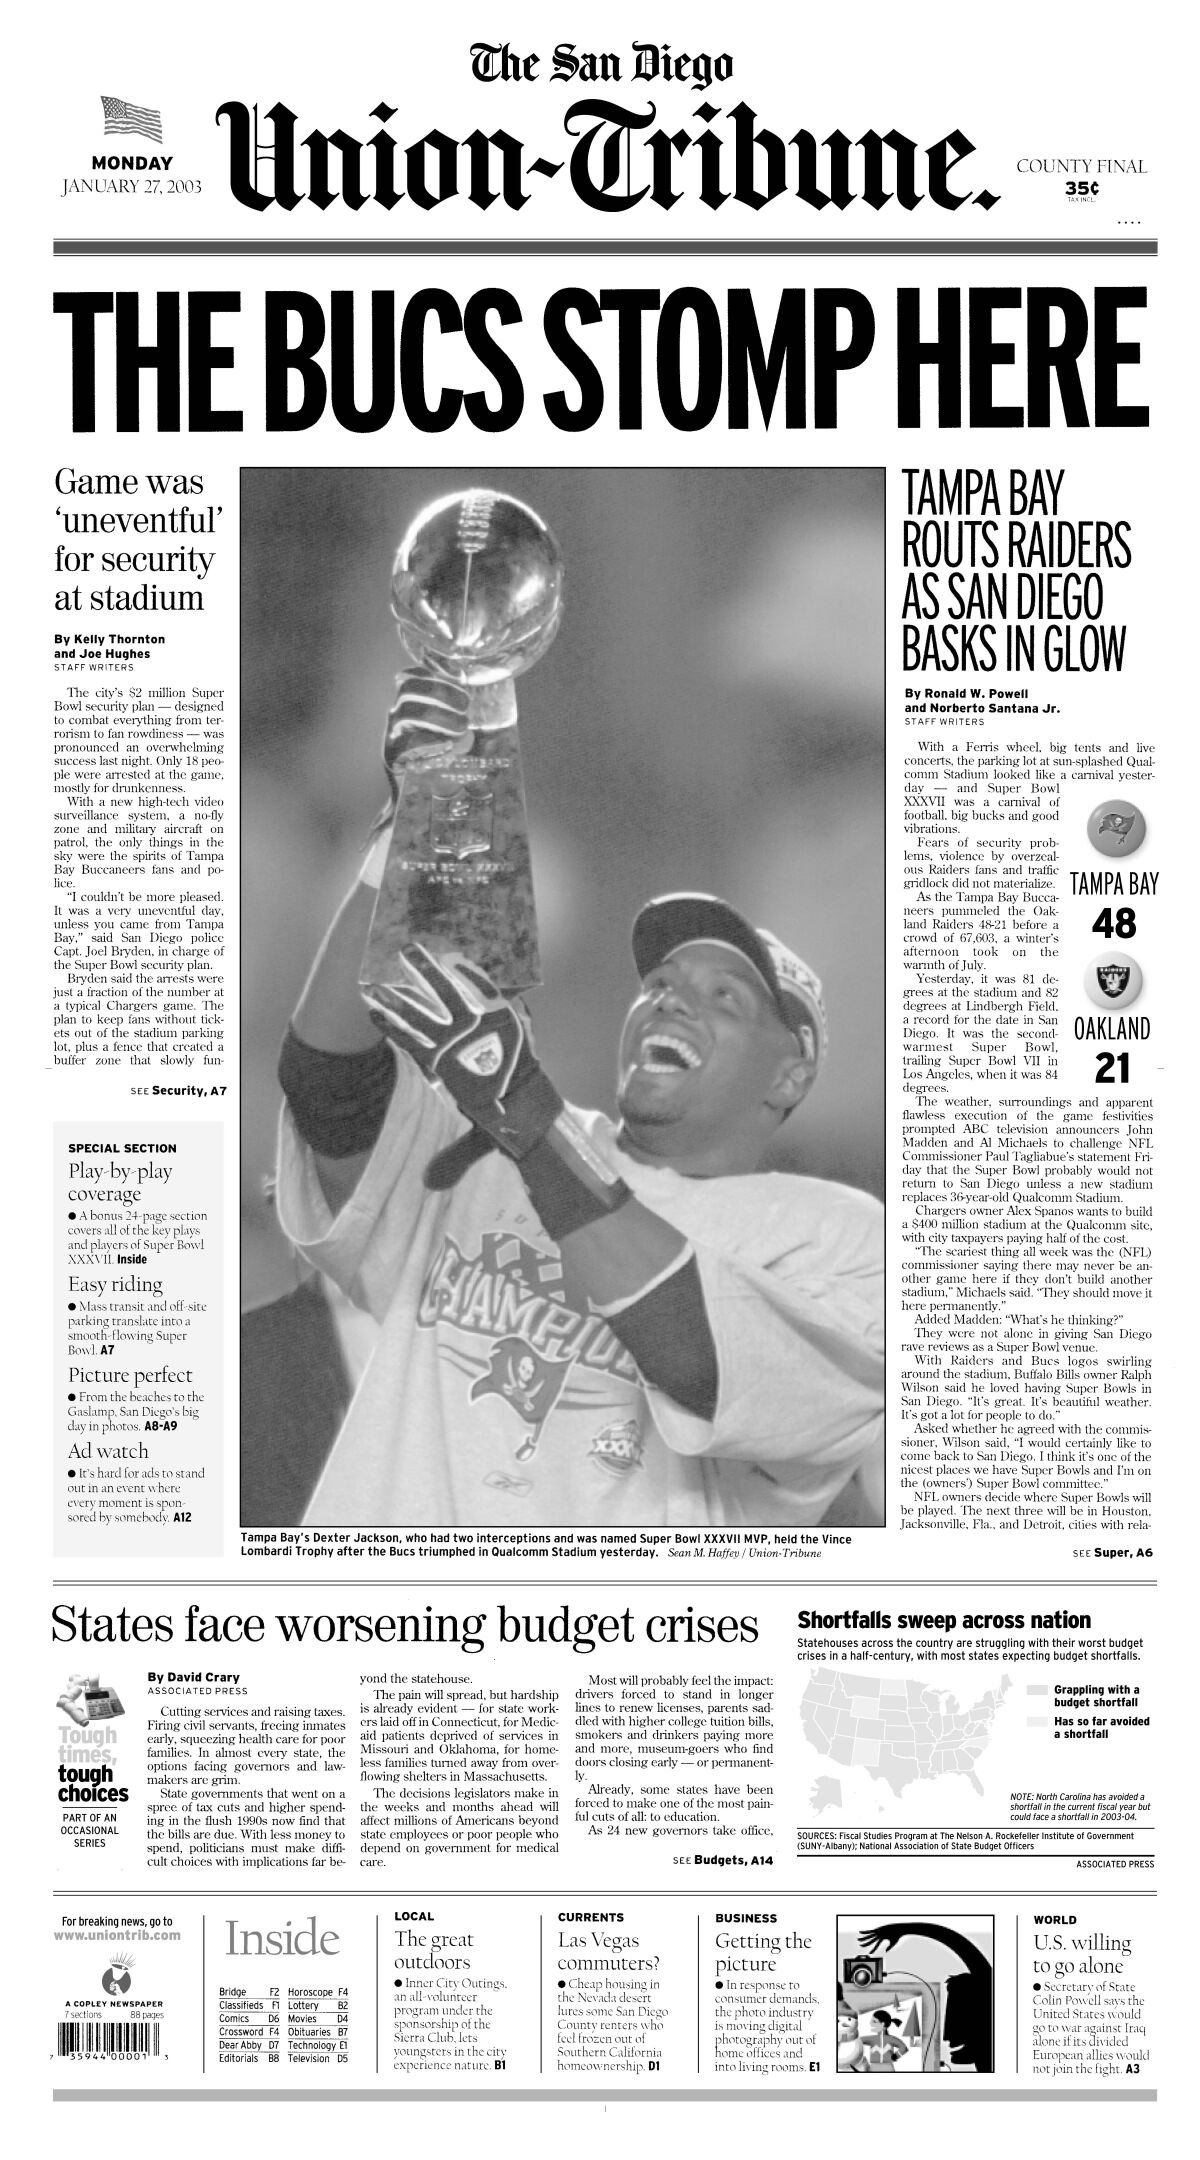 Super Bowl XXXVII dominates the front page of The San Diego Union-Tribune, January 27, 2003.